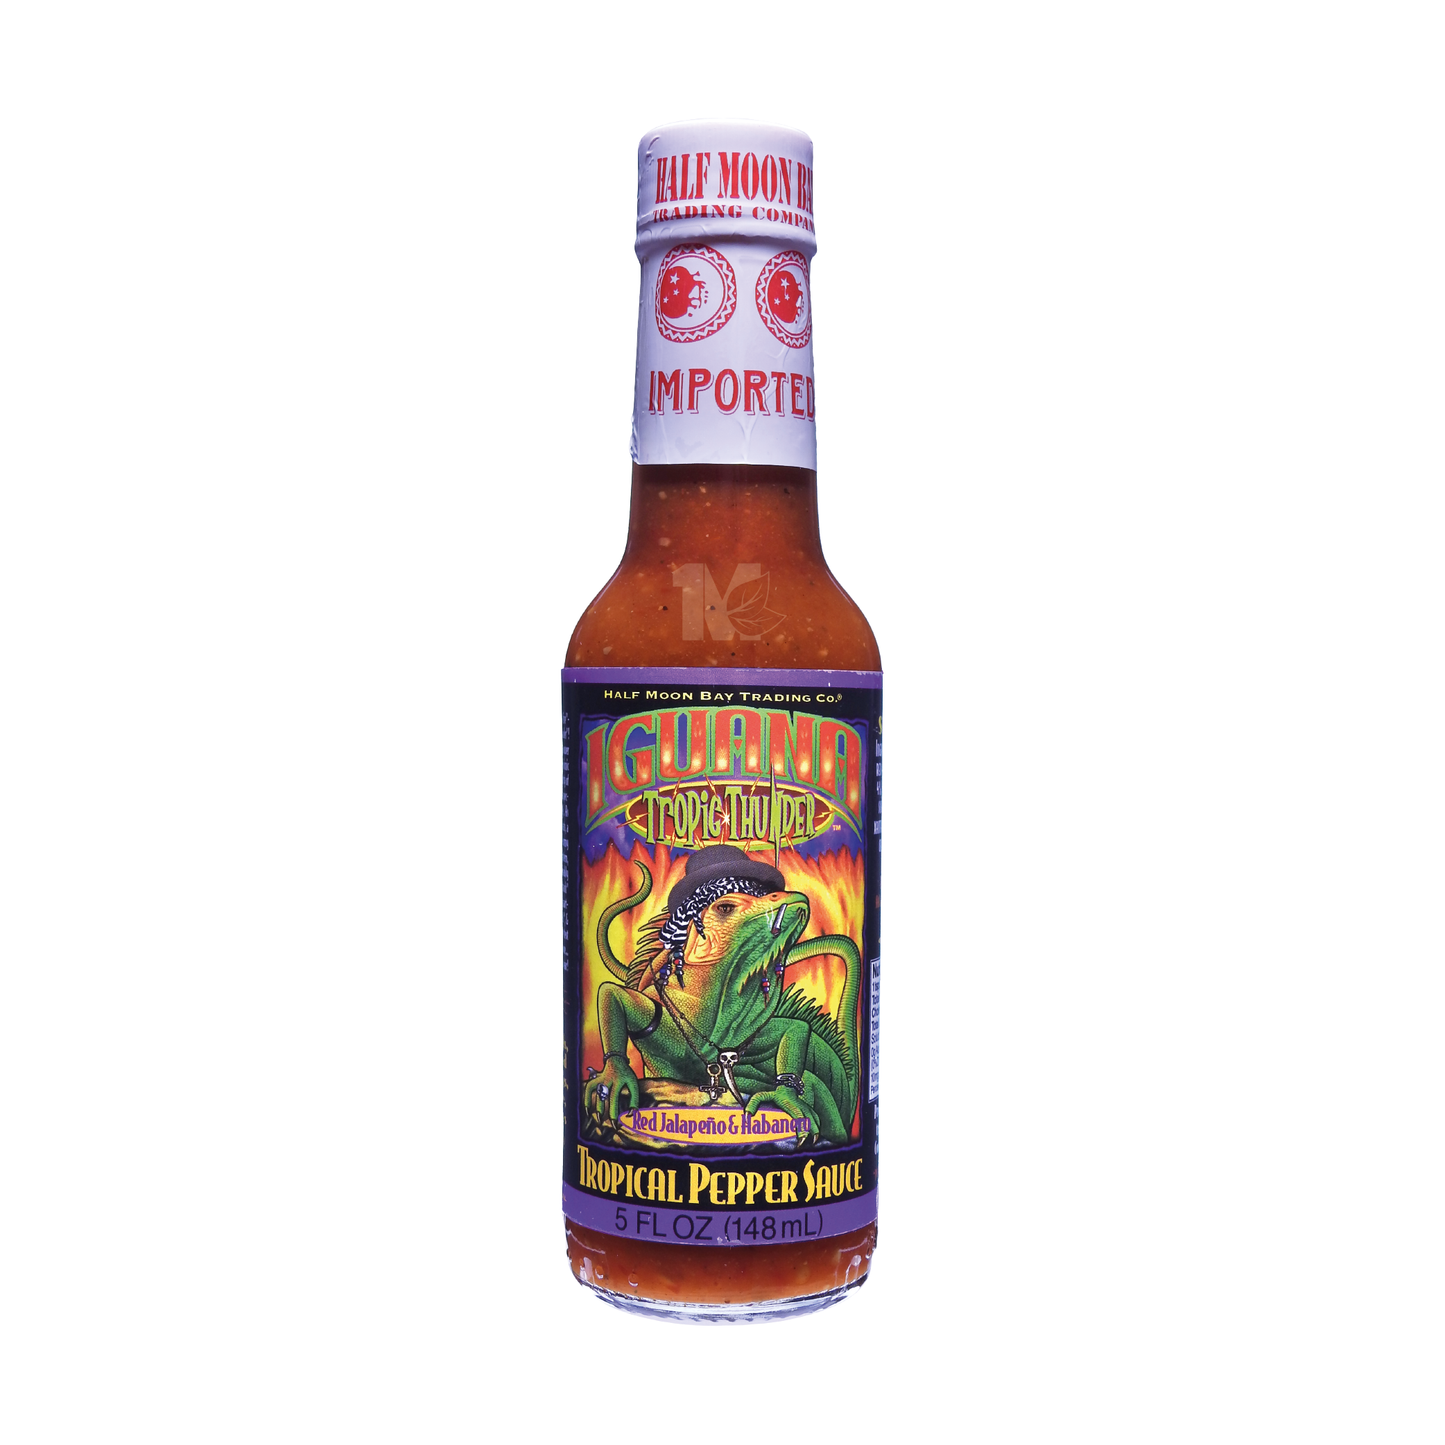 Iguana - Tropic Thunder - Tropical - Pepper Sauce 148ML